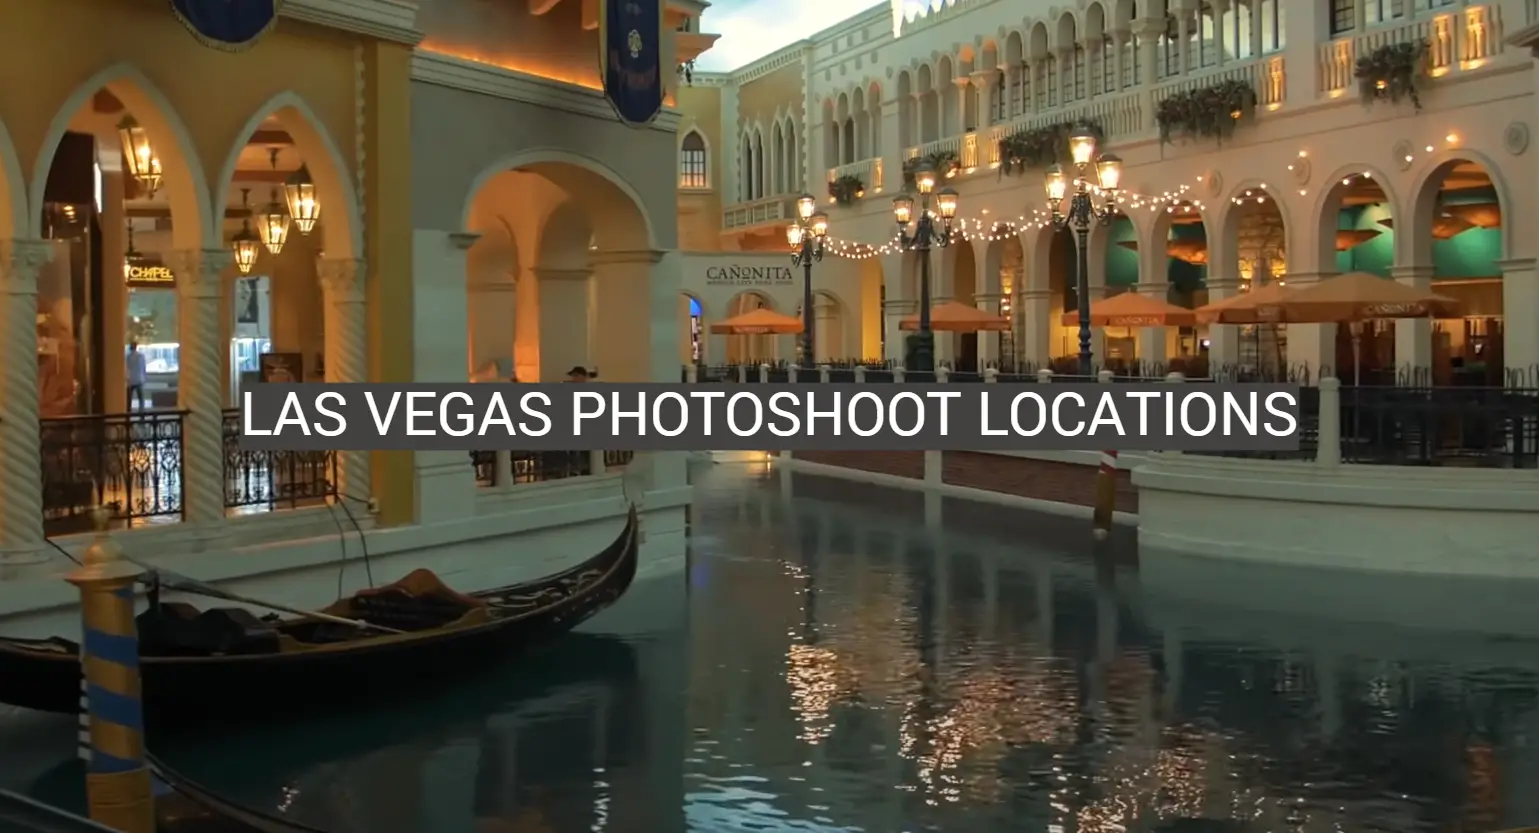 Las Vegas Photoshoot Locations